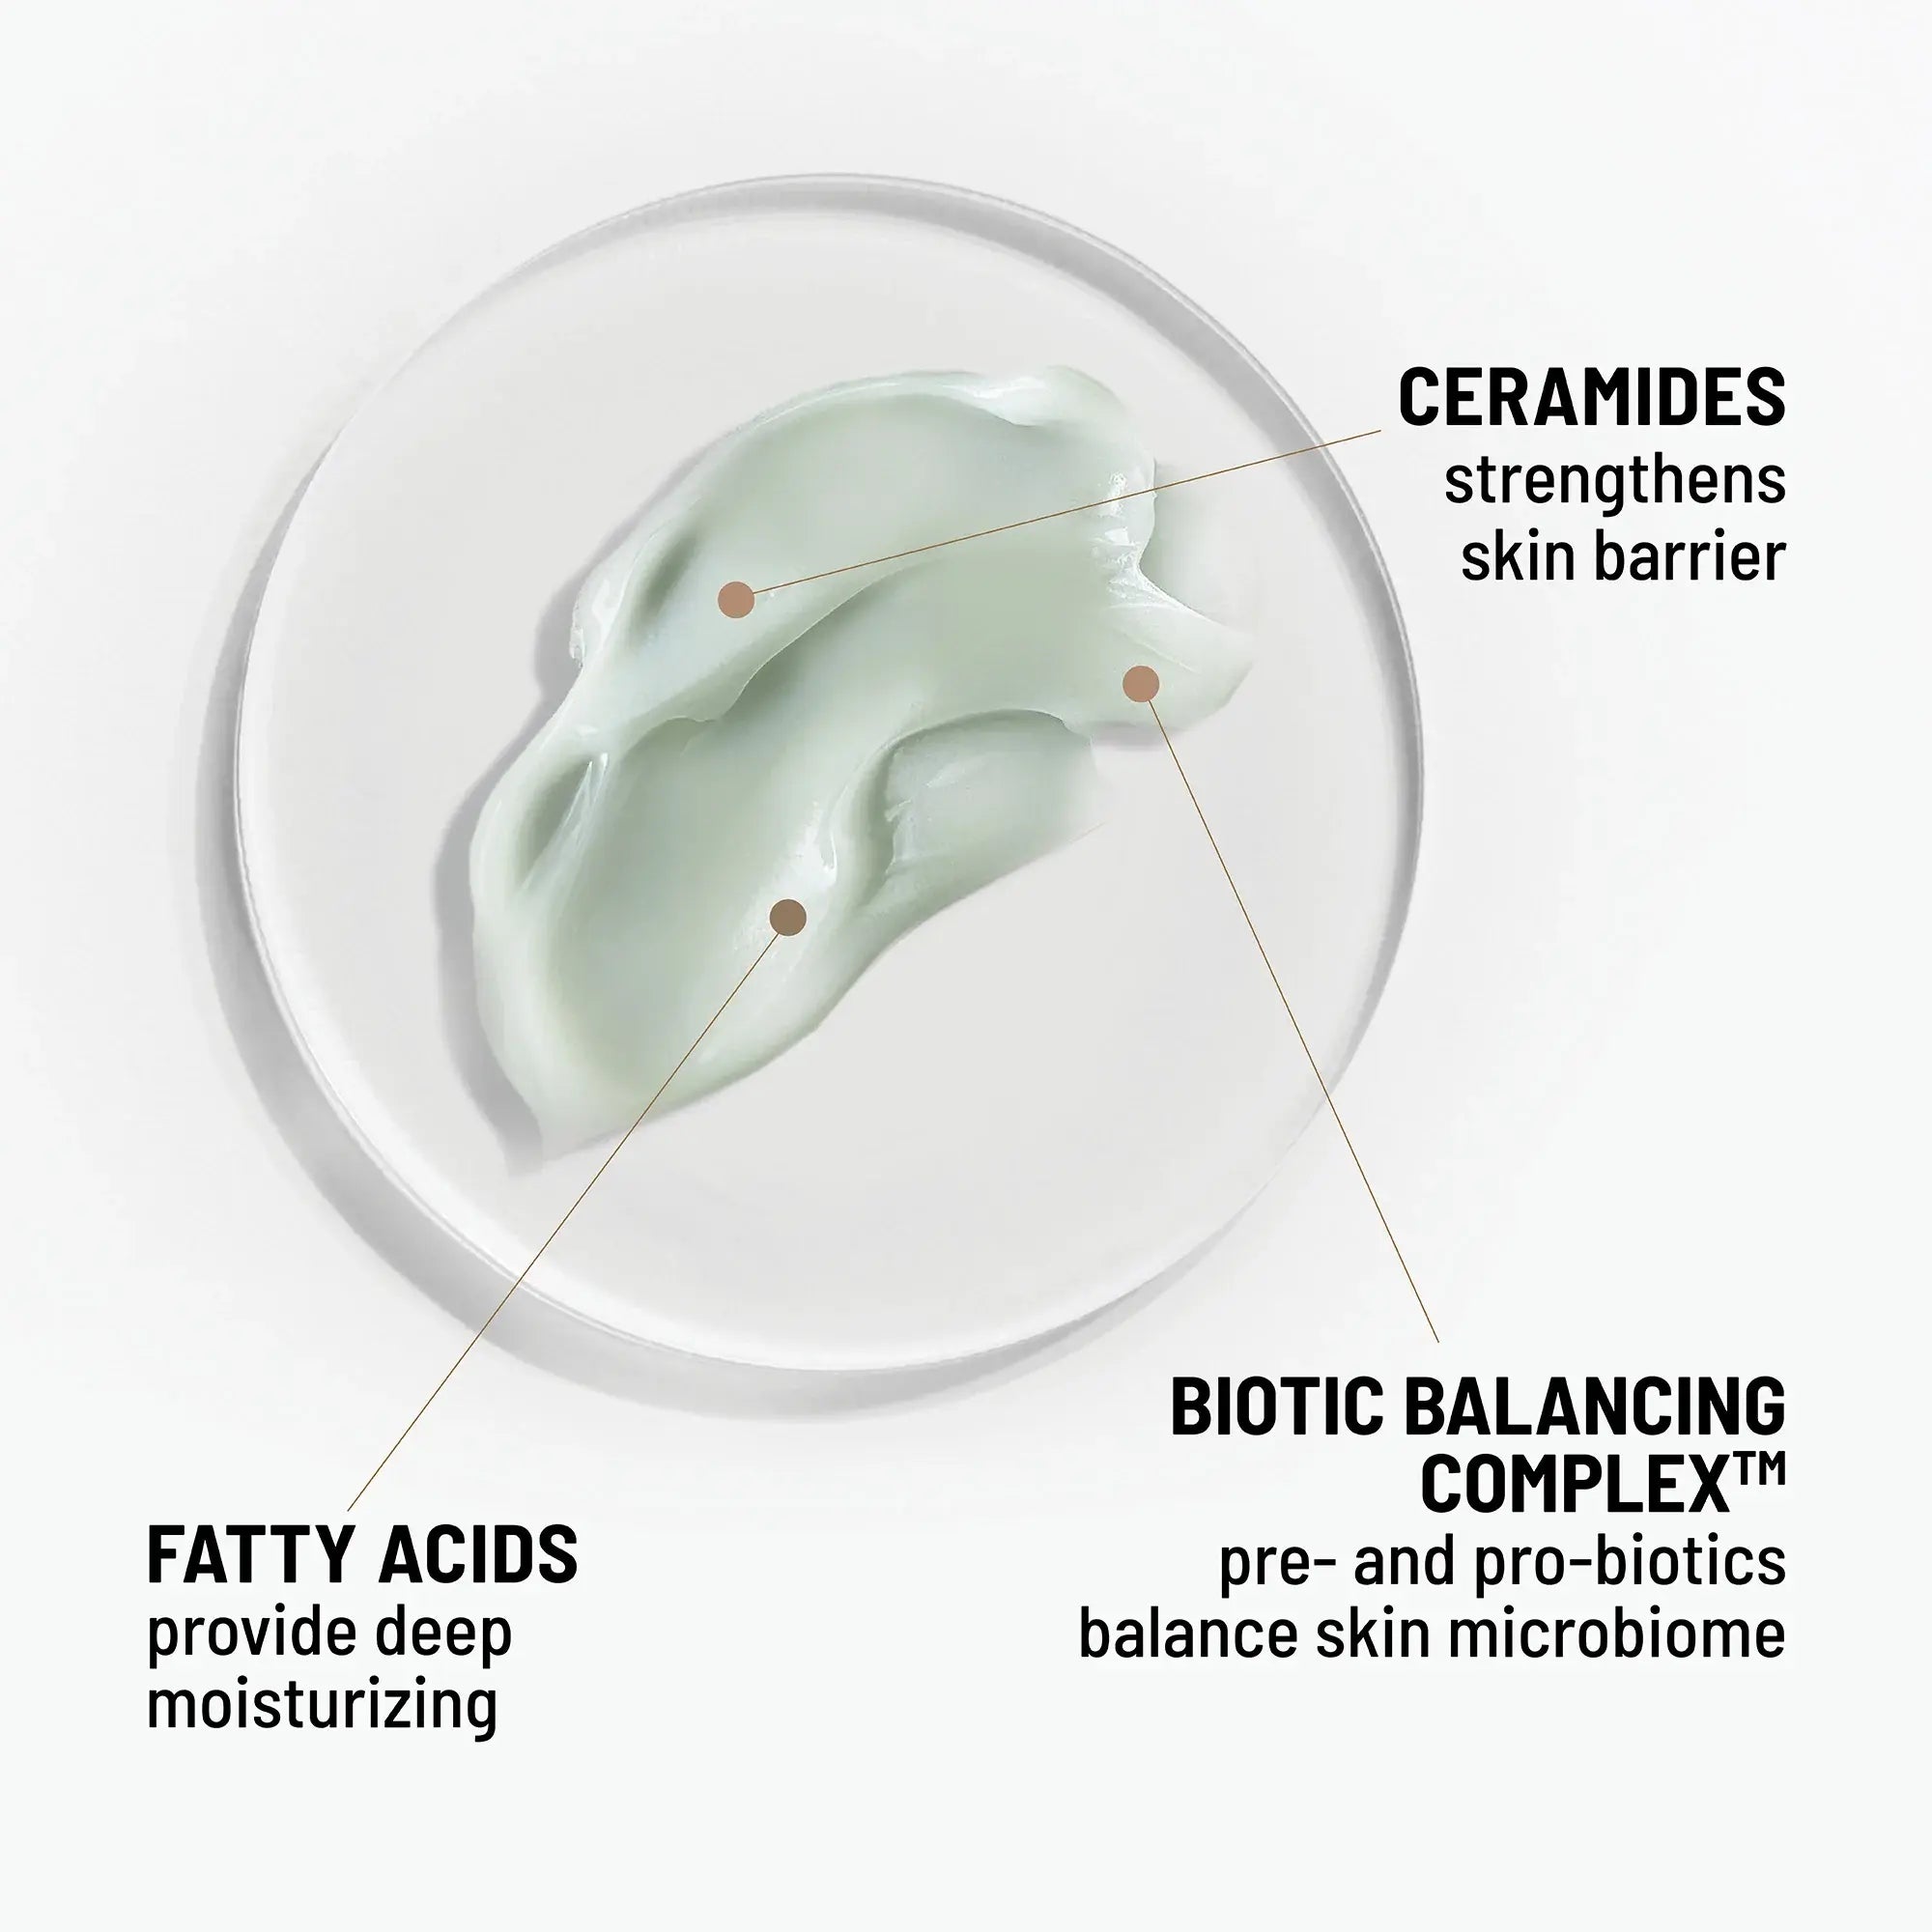 Prebiotics - Hydro Biotic Overnight Hydrating Face Mask (1.7 oz)